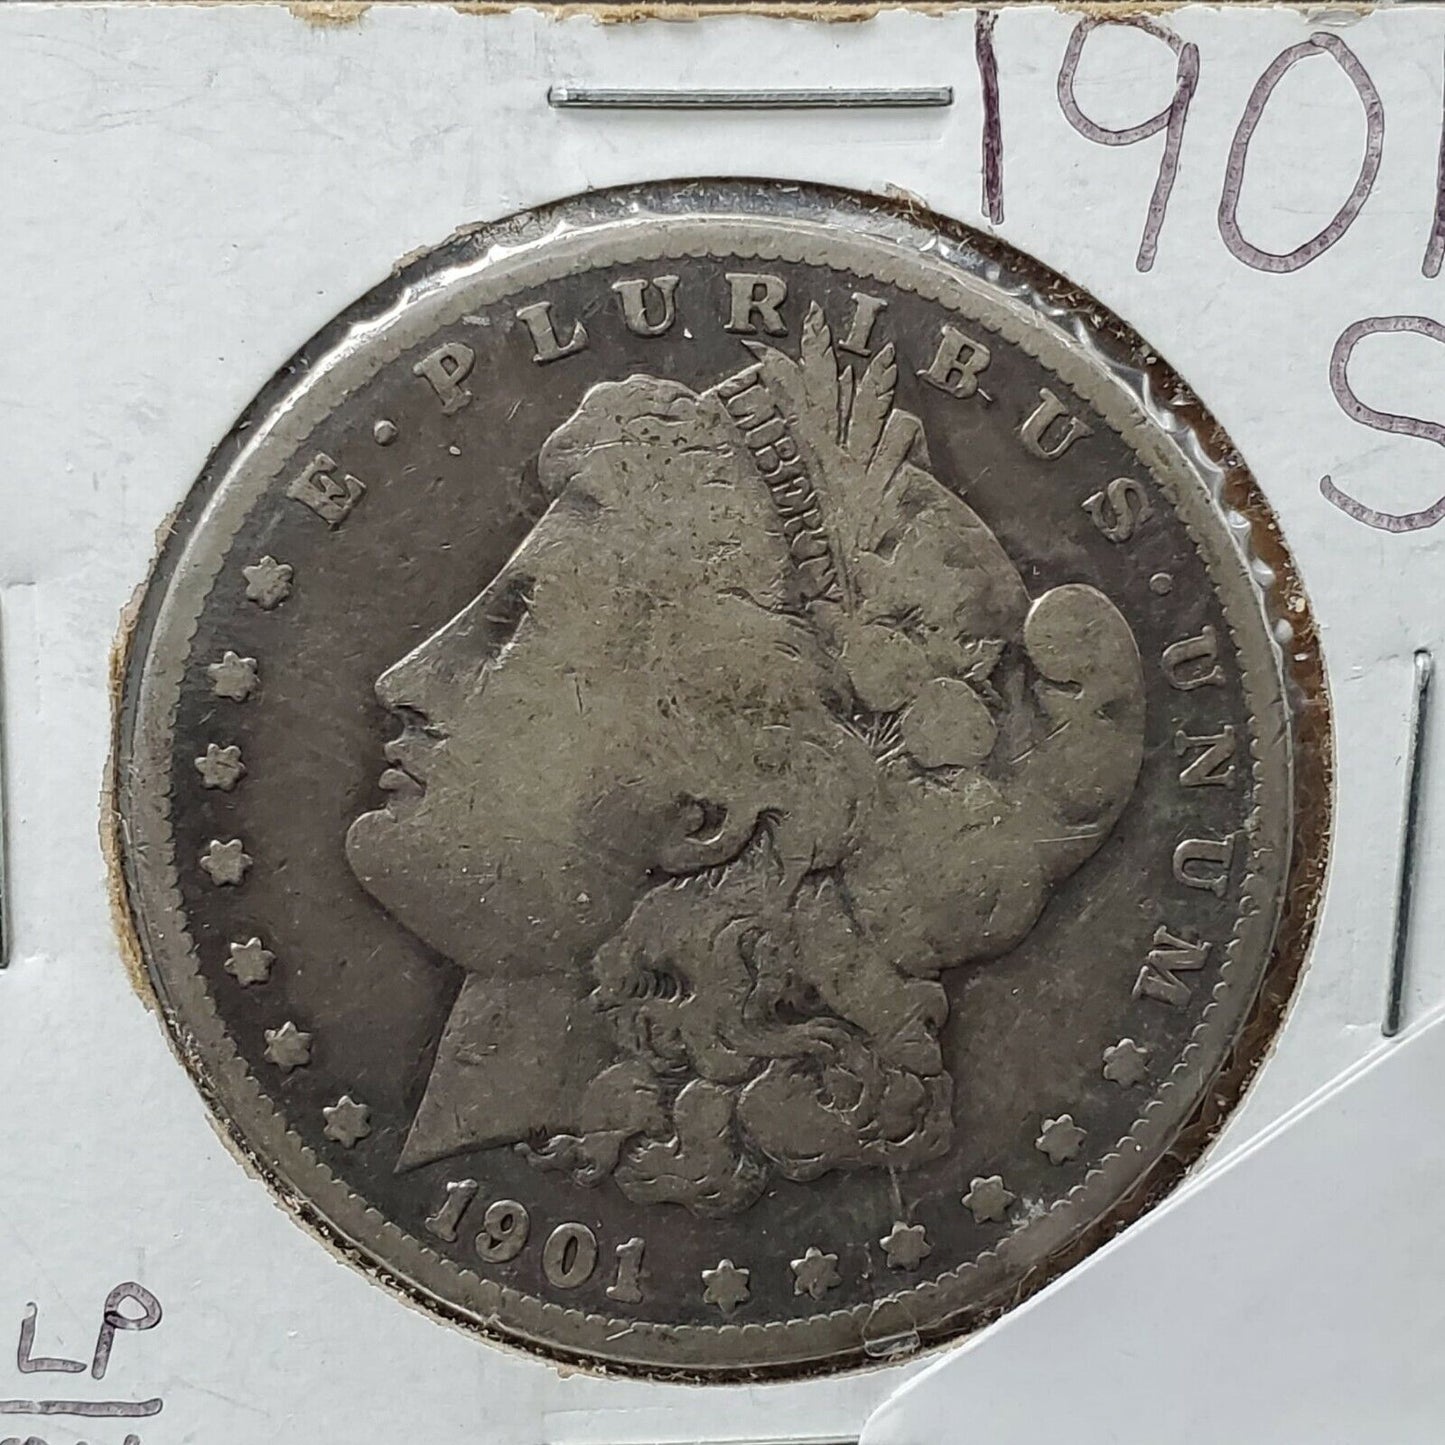 1901 S $1 Morgan Silver Eagle Dollar Coin VG Very Good 120 Years Anniversary